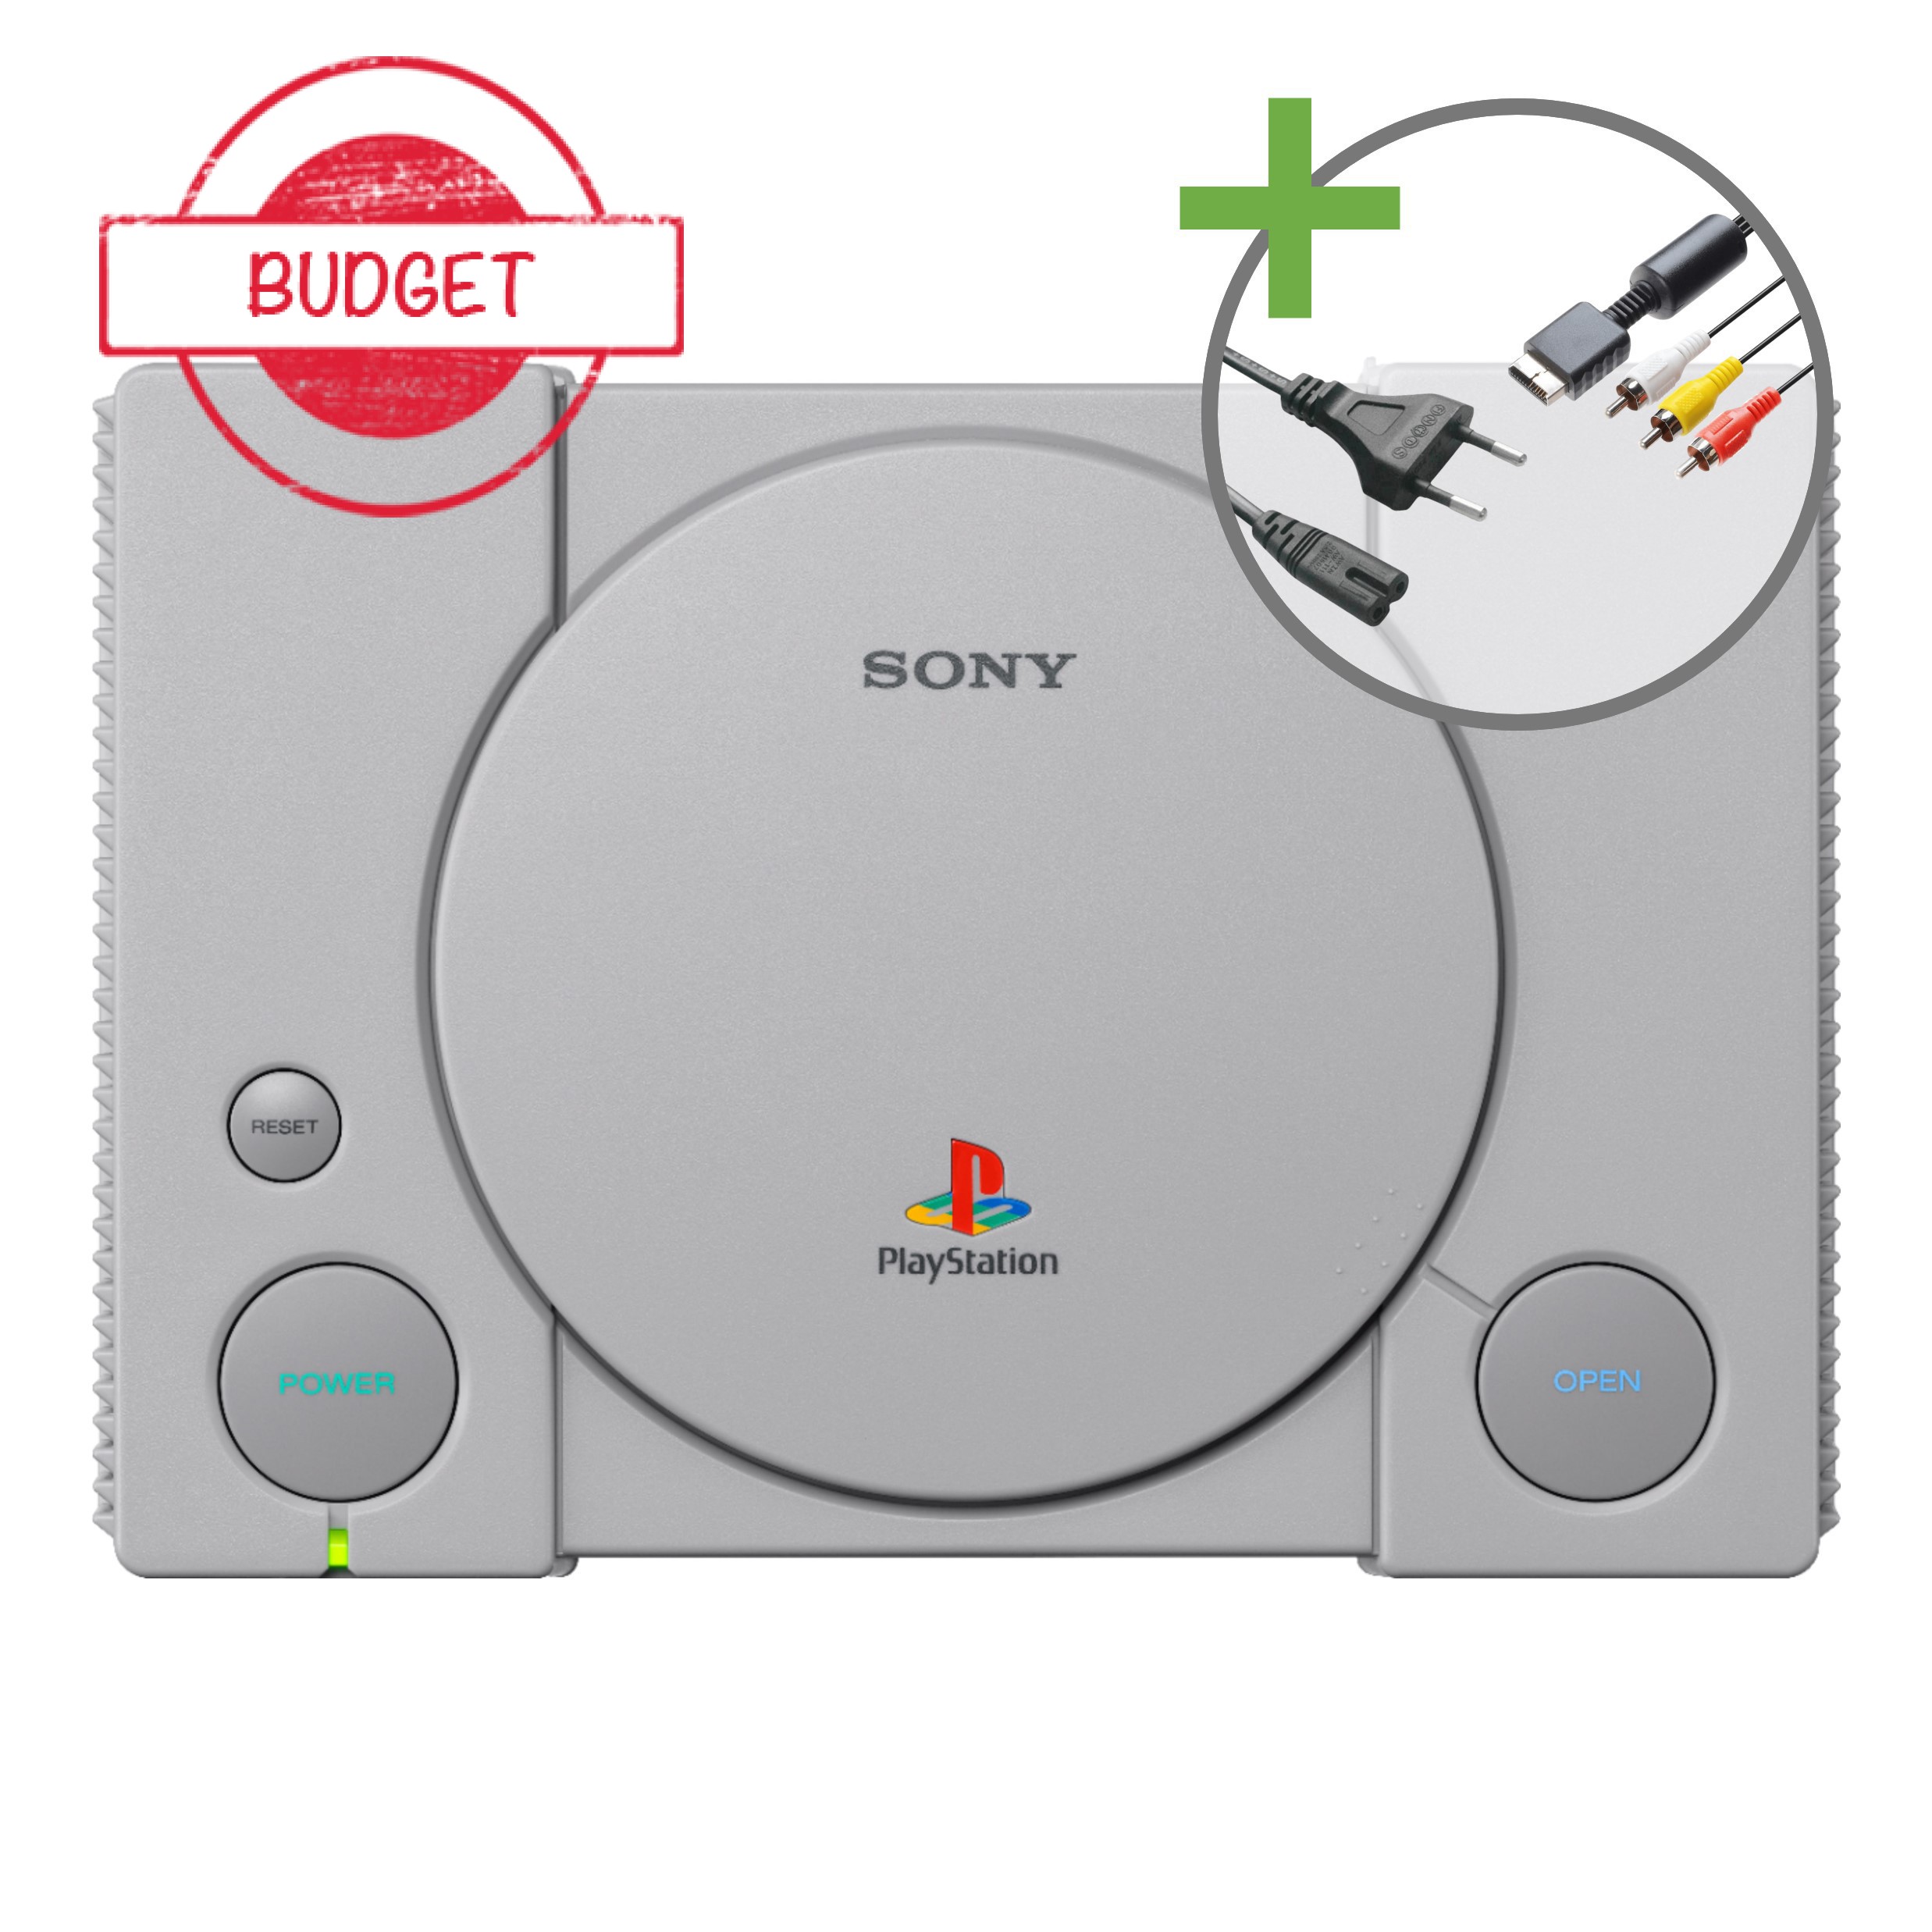 Sony PlayStation 1 Starter Pack - Analog Edition - Budget - Playstation 1 Hardware - 3